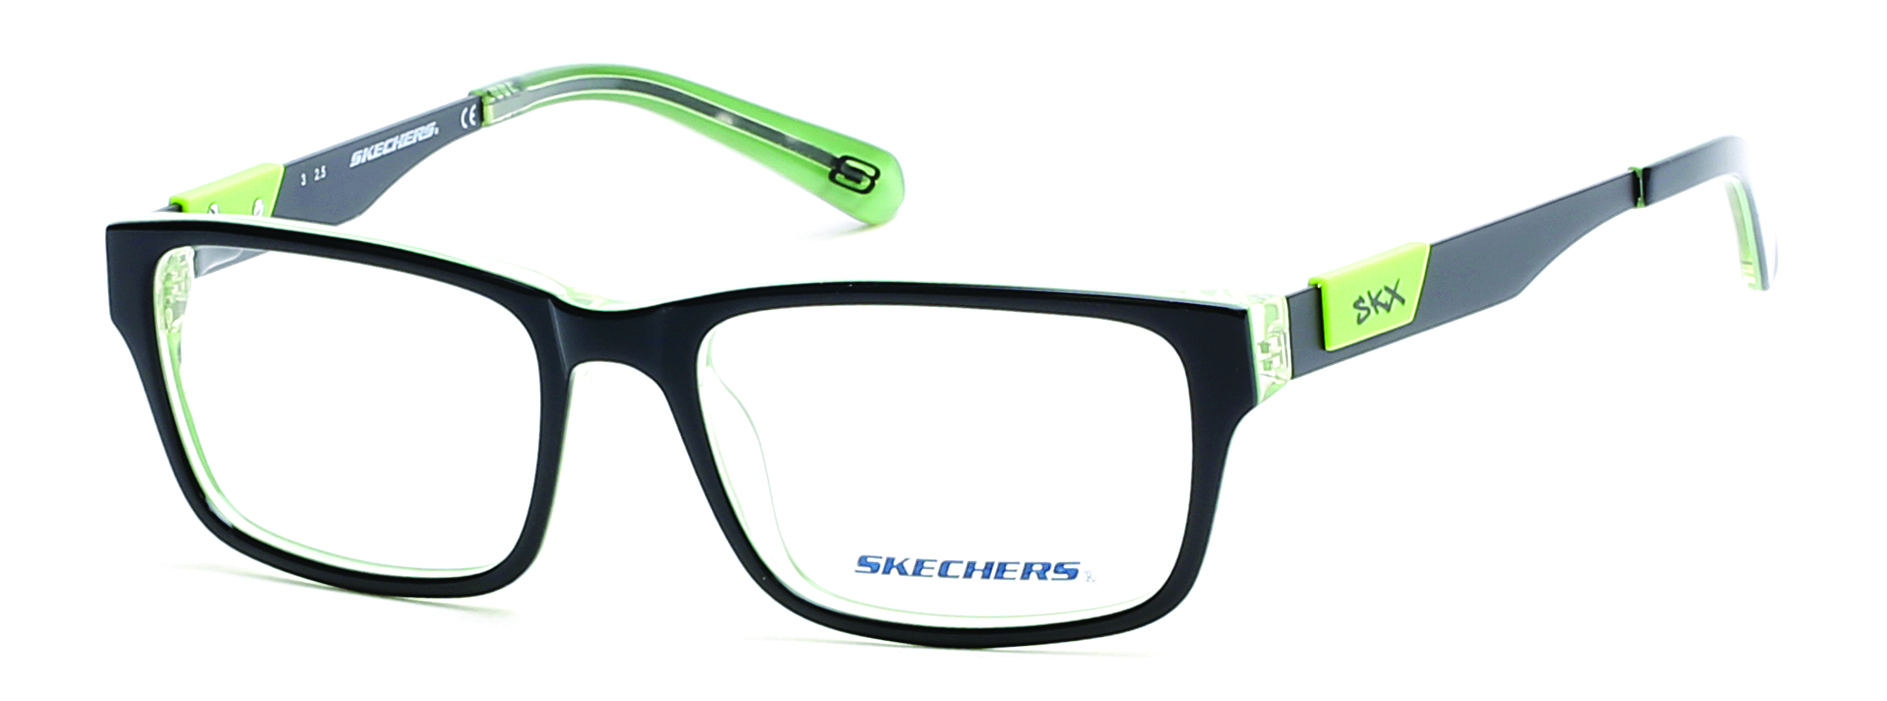 sketchers kids glasses